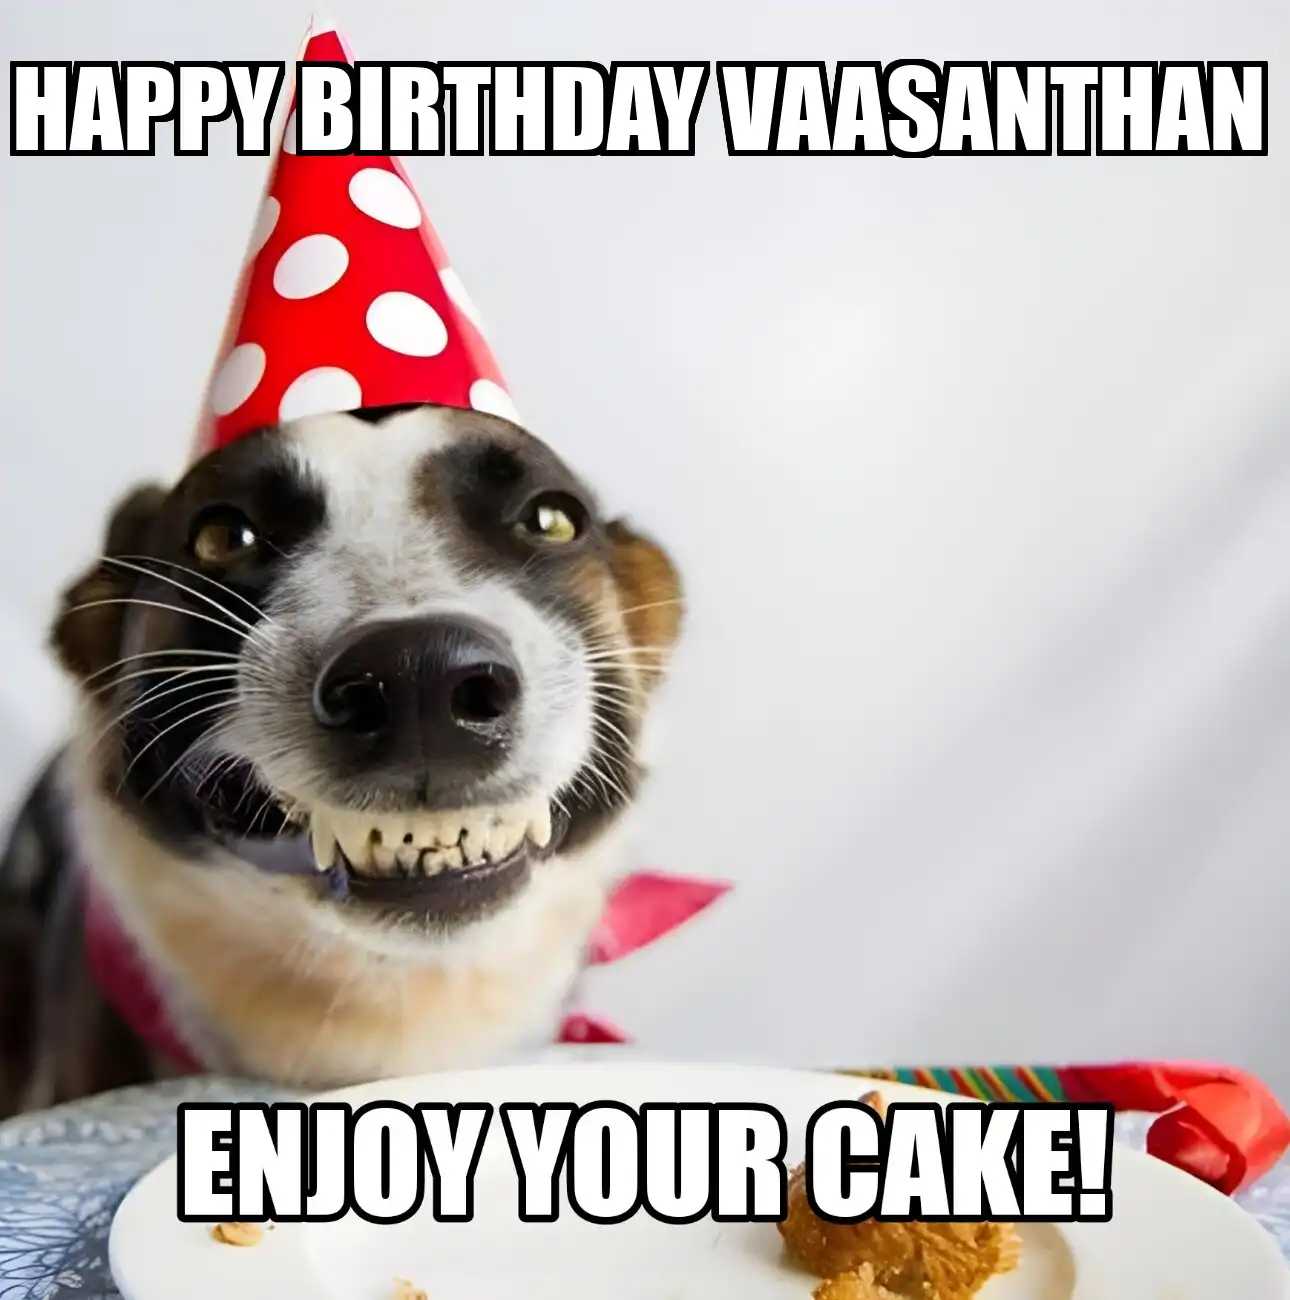 Happy Birthday Vaasanthan Enjoy Your Cake Dog Meme